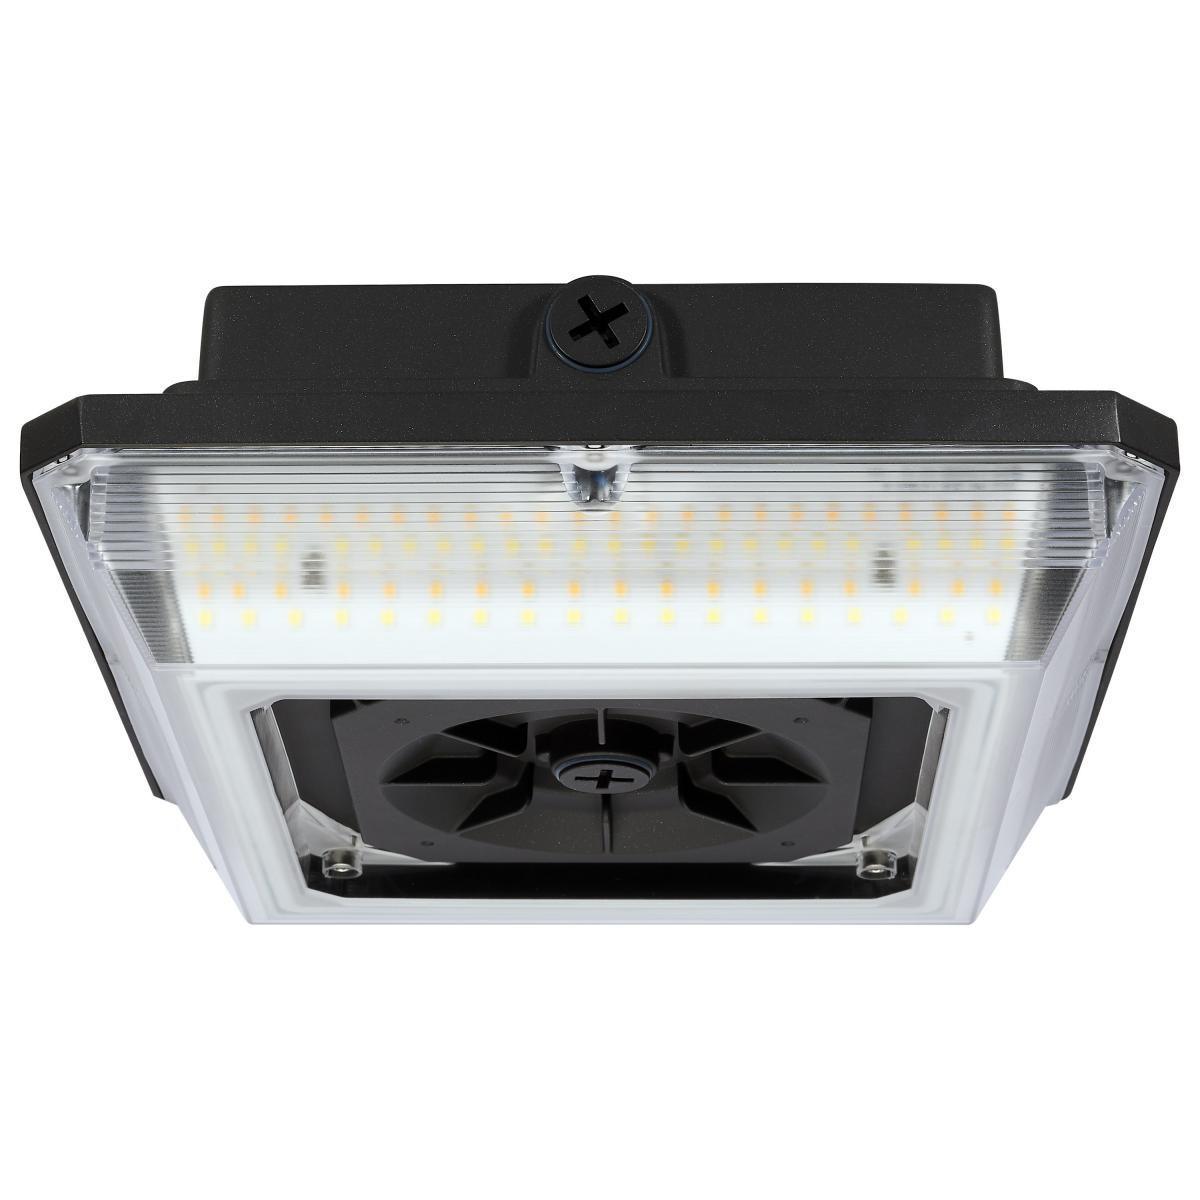 2,660-6,280 Lumens LED Standard Canopy Light, 20-50 Adjustable Watts, Selectable CCT 30K/40K/50K, 120-277V - Bees Lighting